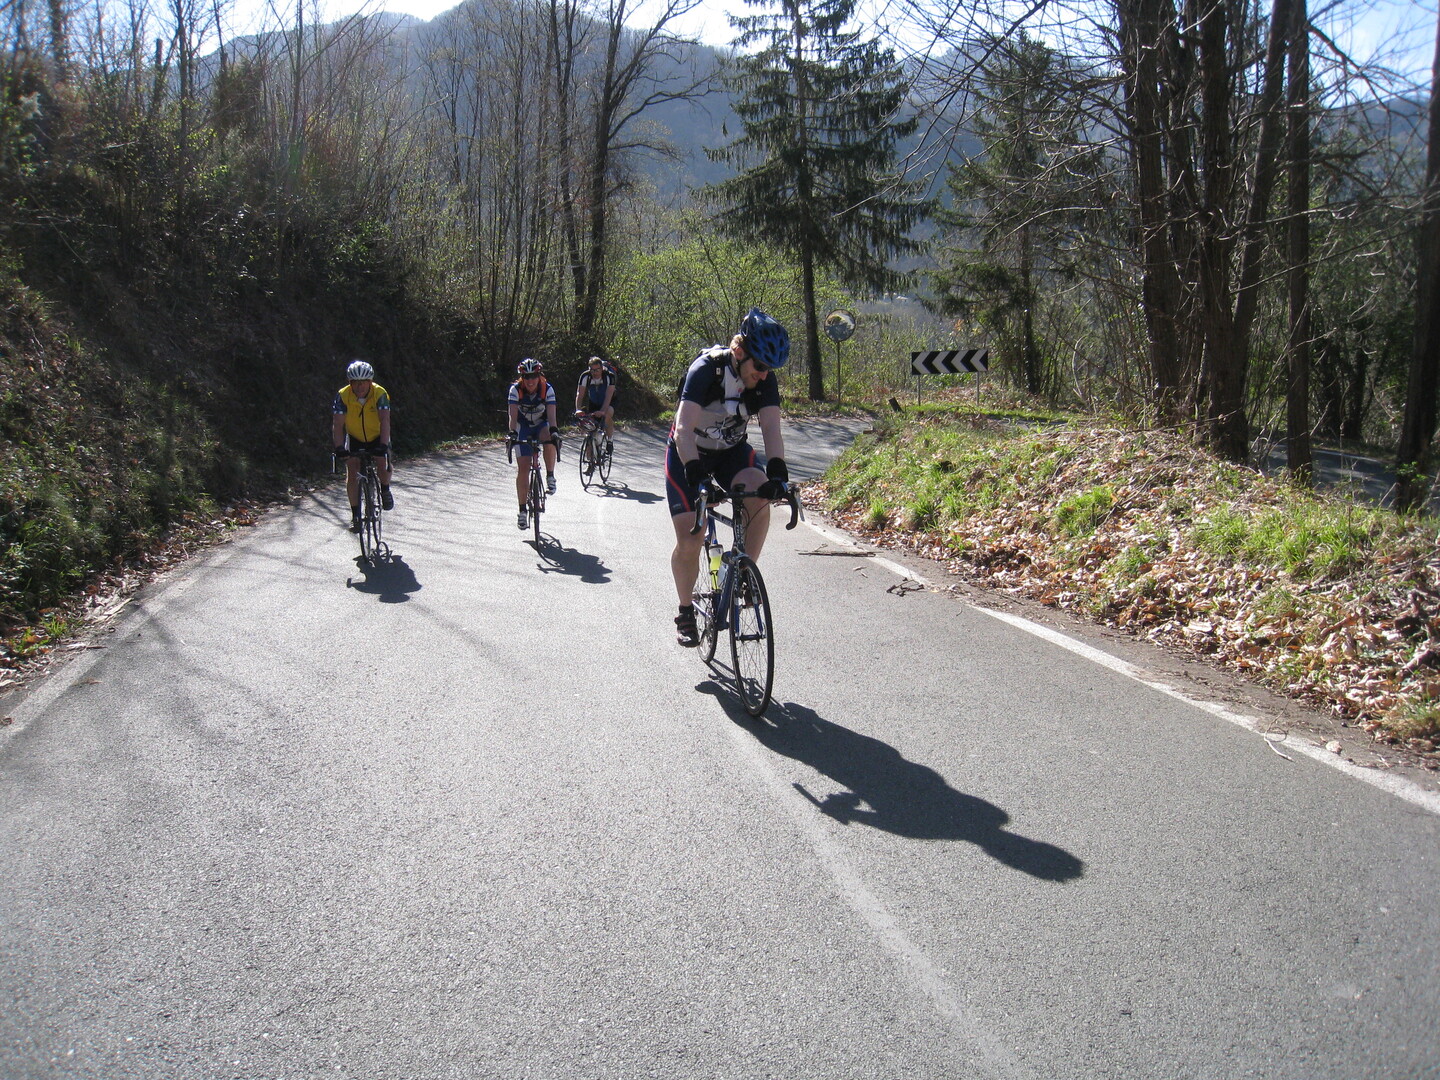 Aufstieg zum [[Passo di Romaggi|paesse|passo-di-romaggi]], welcher ins Val Cichero führt.
(März 2009)